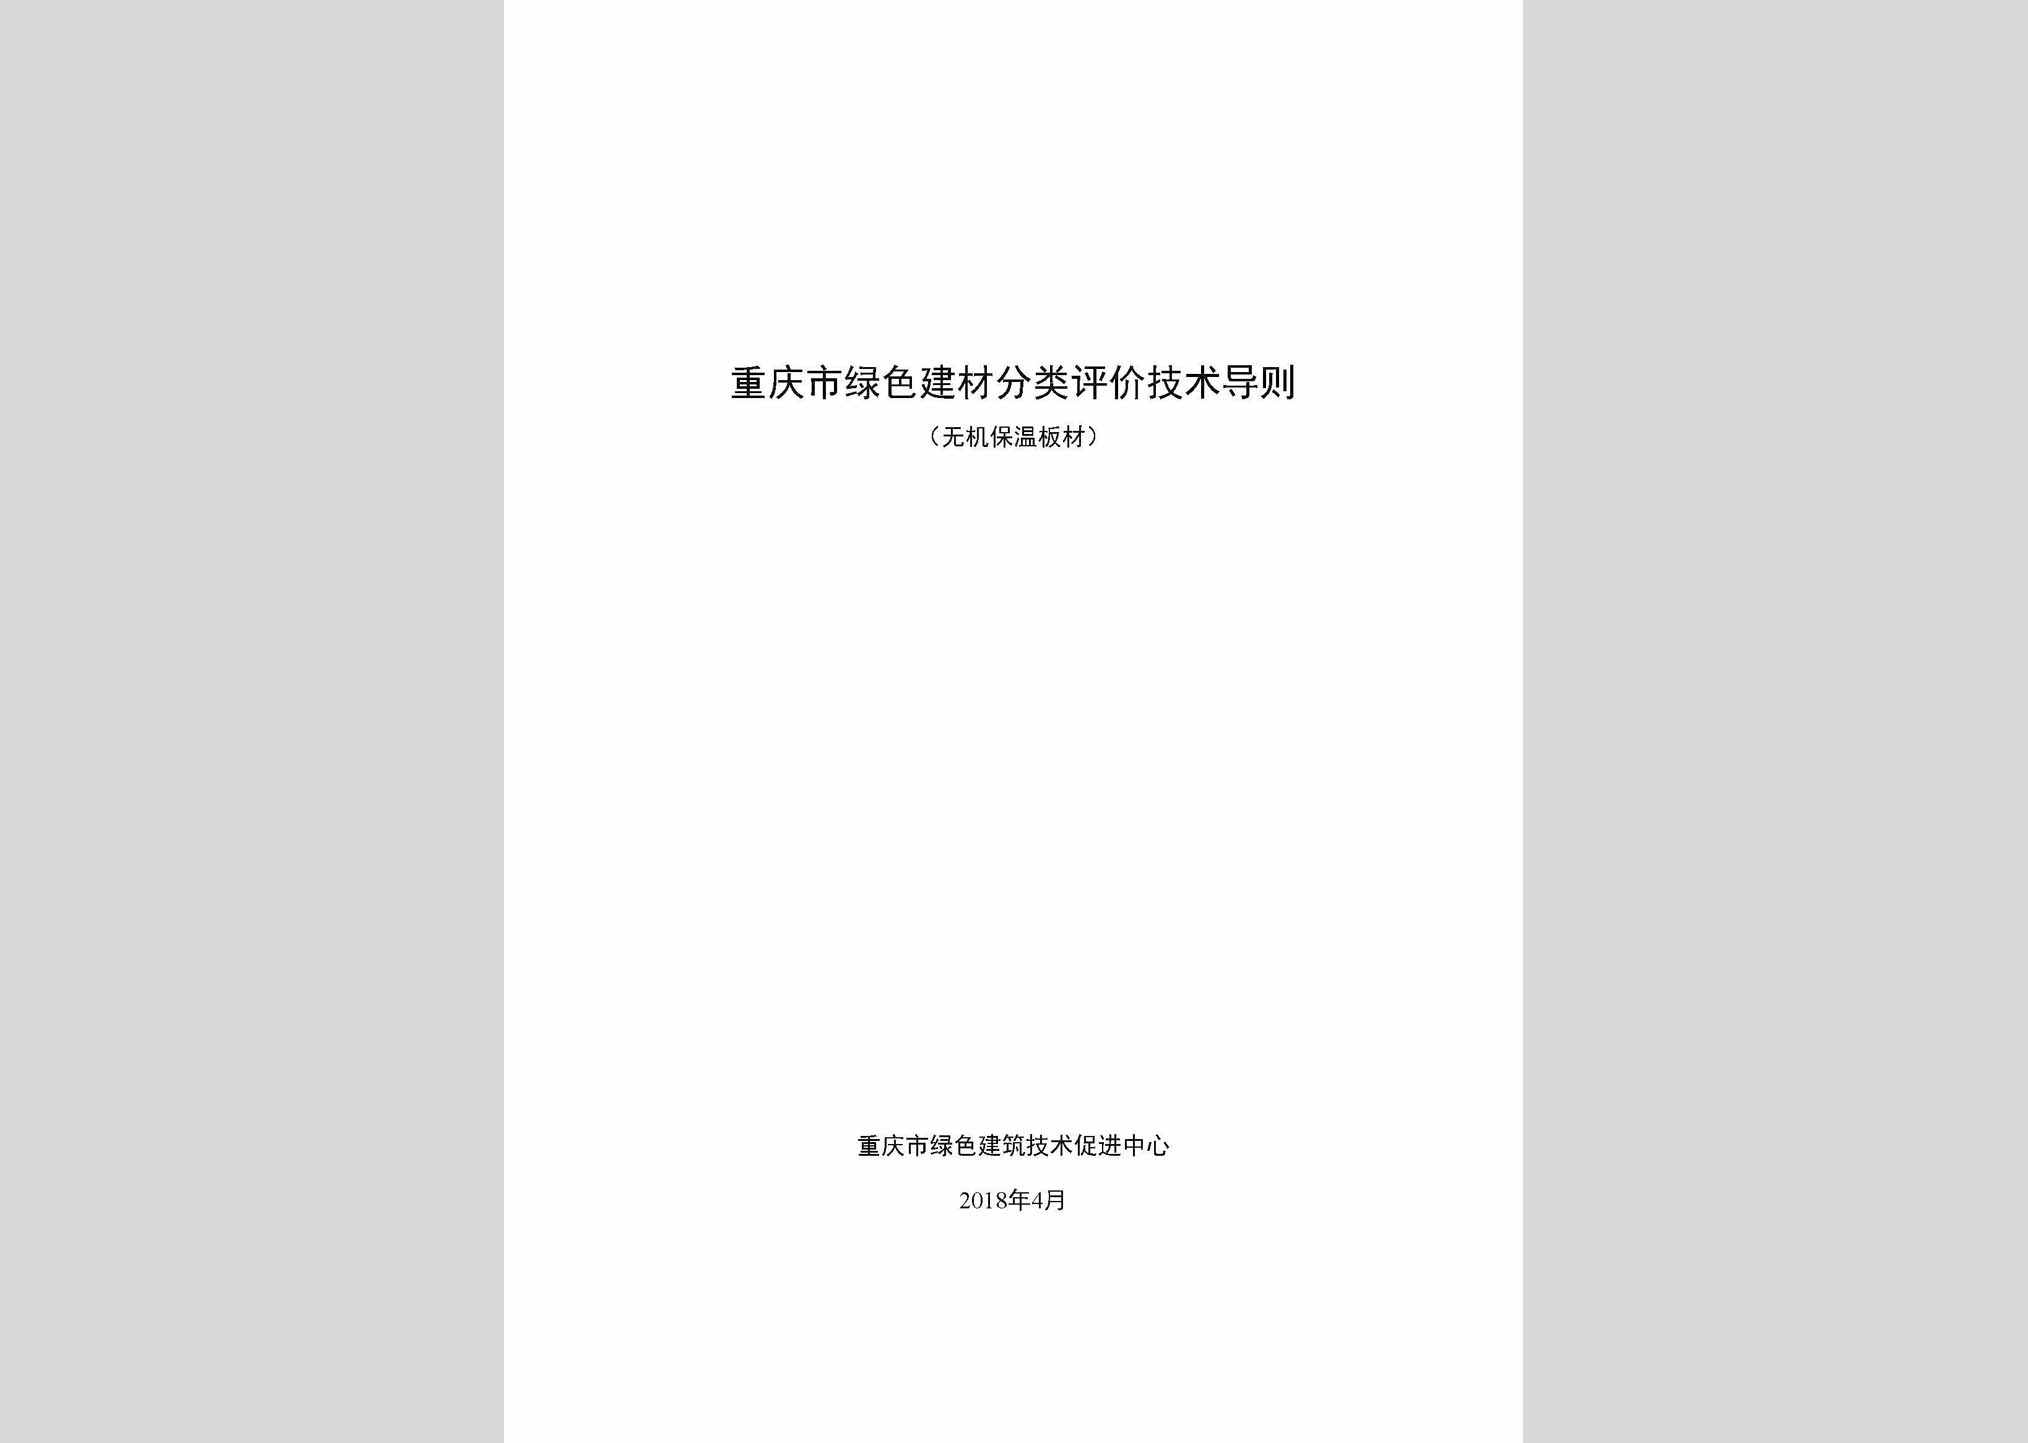 WJBWBCDZ：重庆市绿色建材分类评价技术导则(无机保温板材)